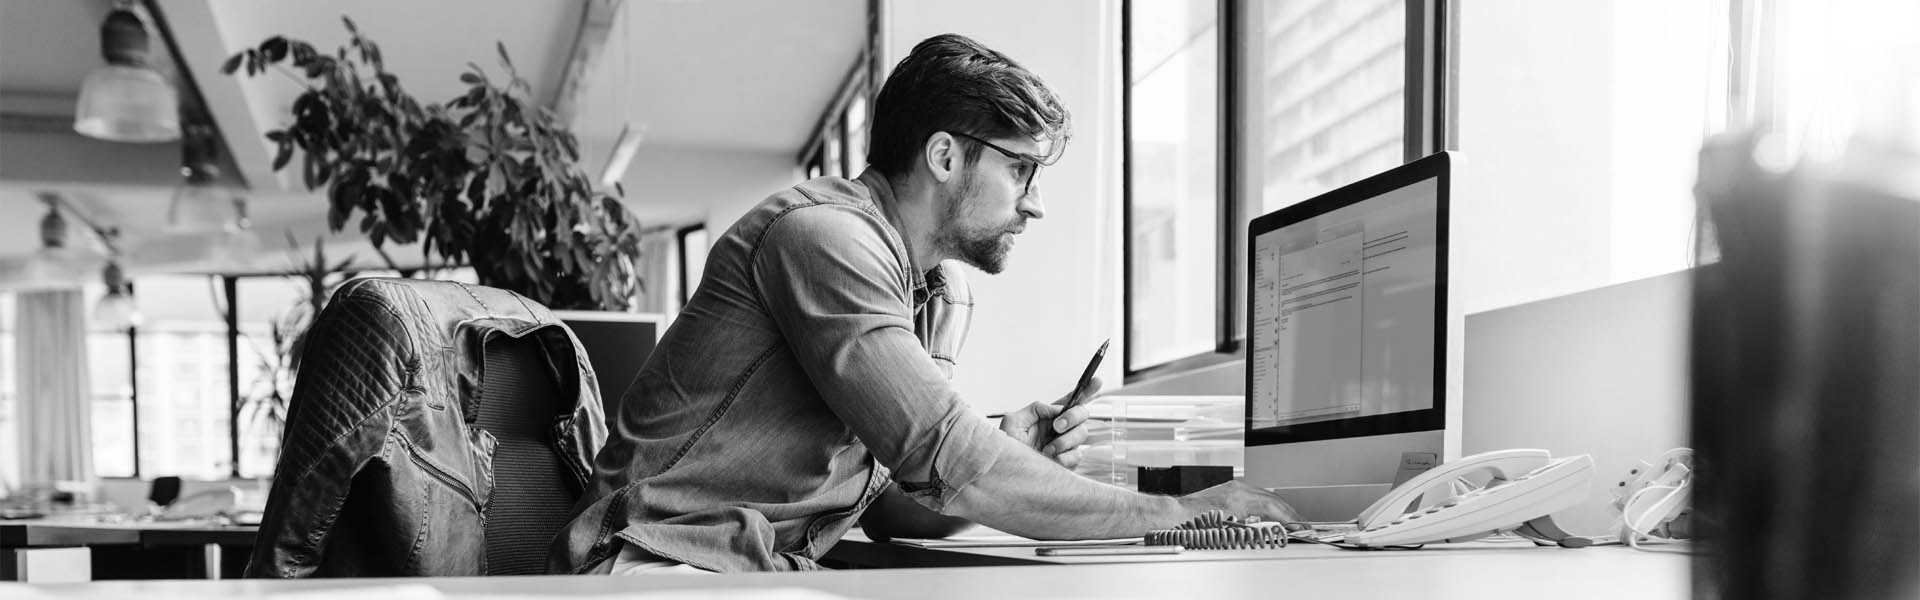 man staring intently at computer